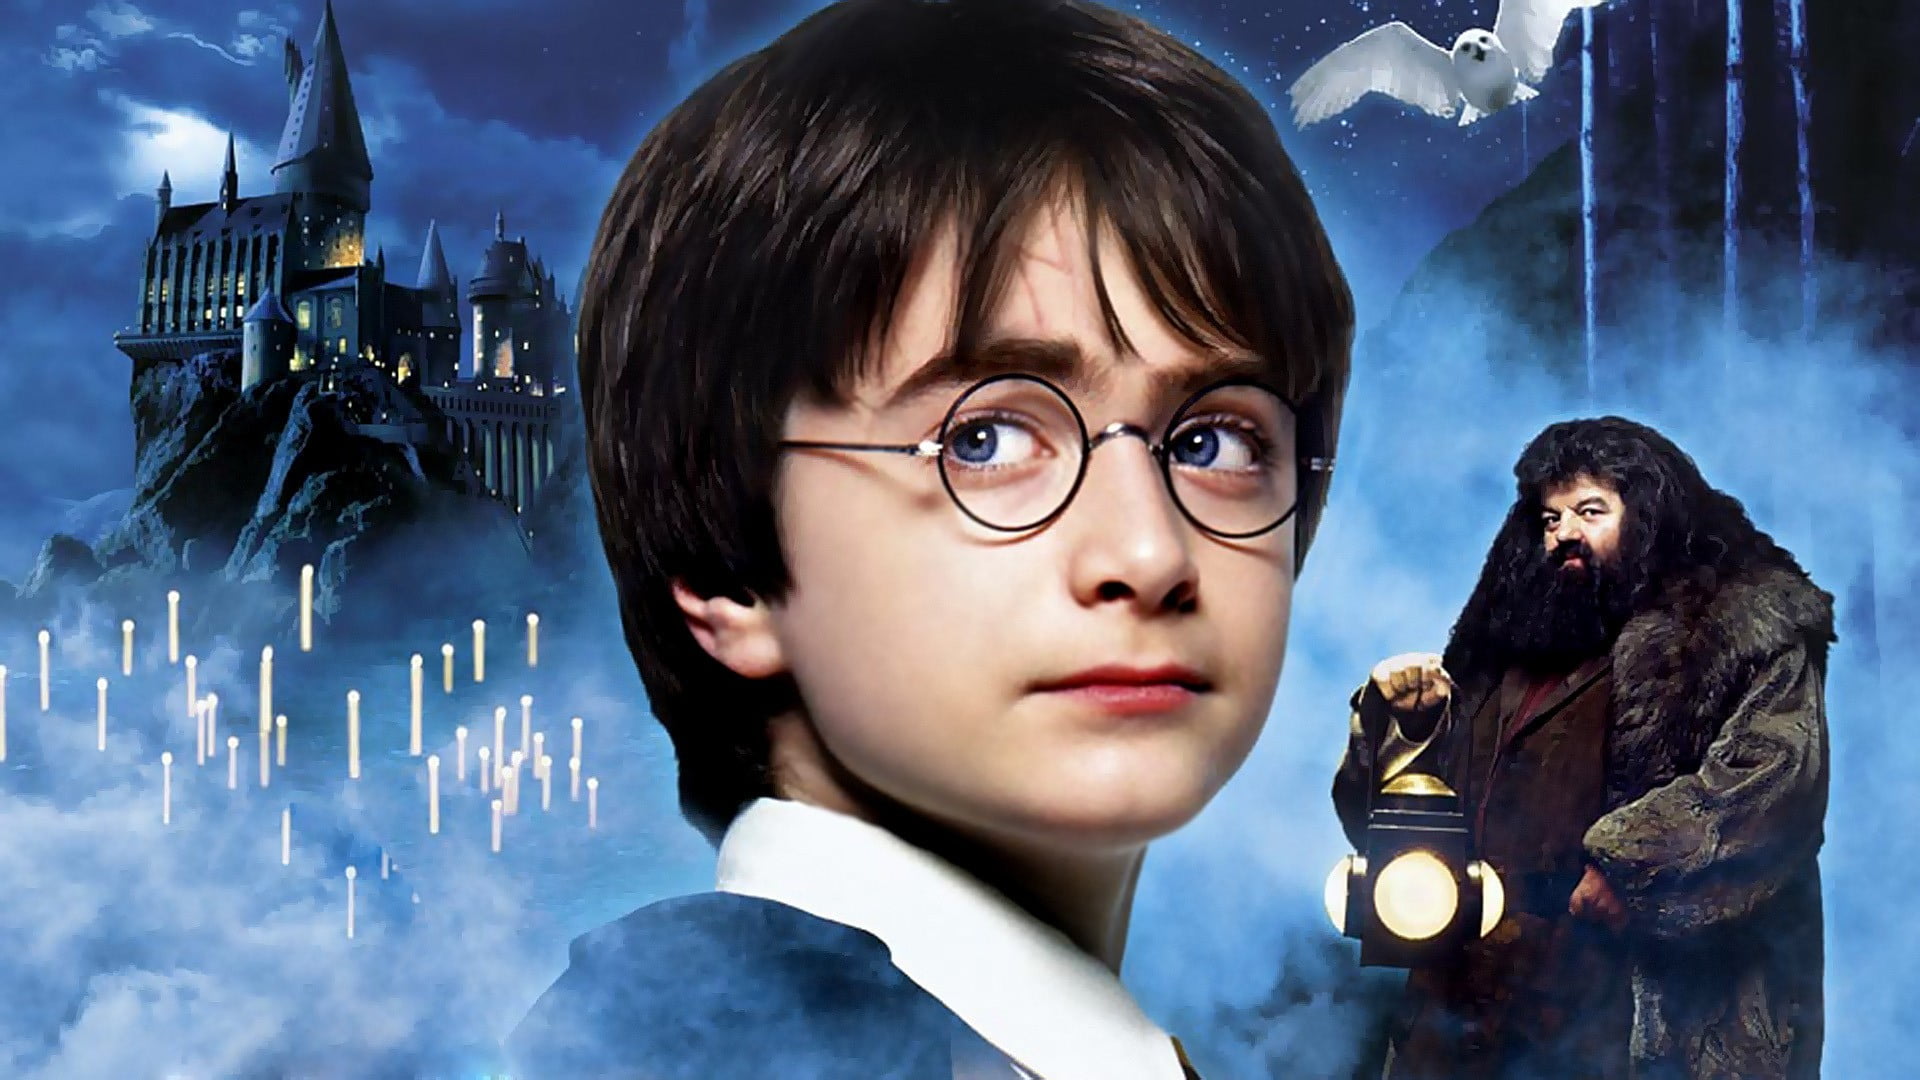 Harry Potter wallpaper, Hogwarts, lantern, castle, candles, Daniel Radcliffe